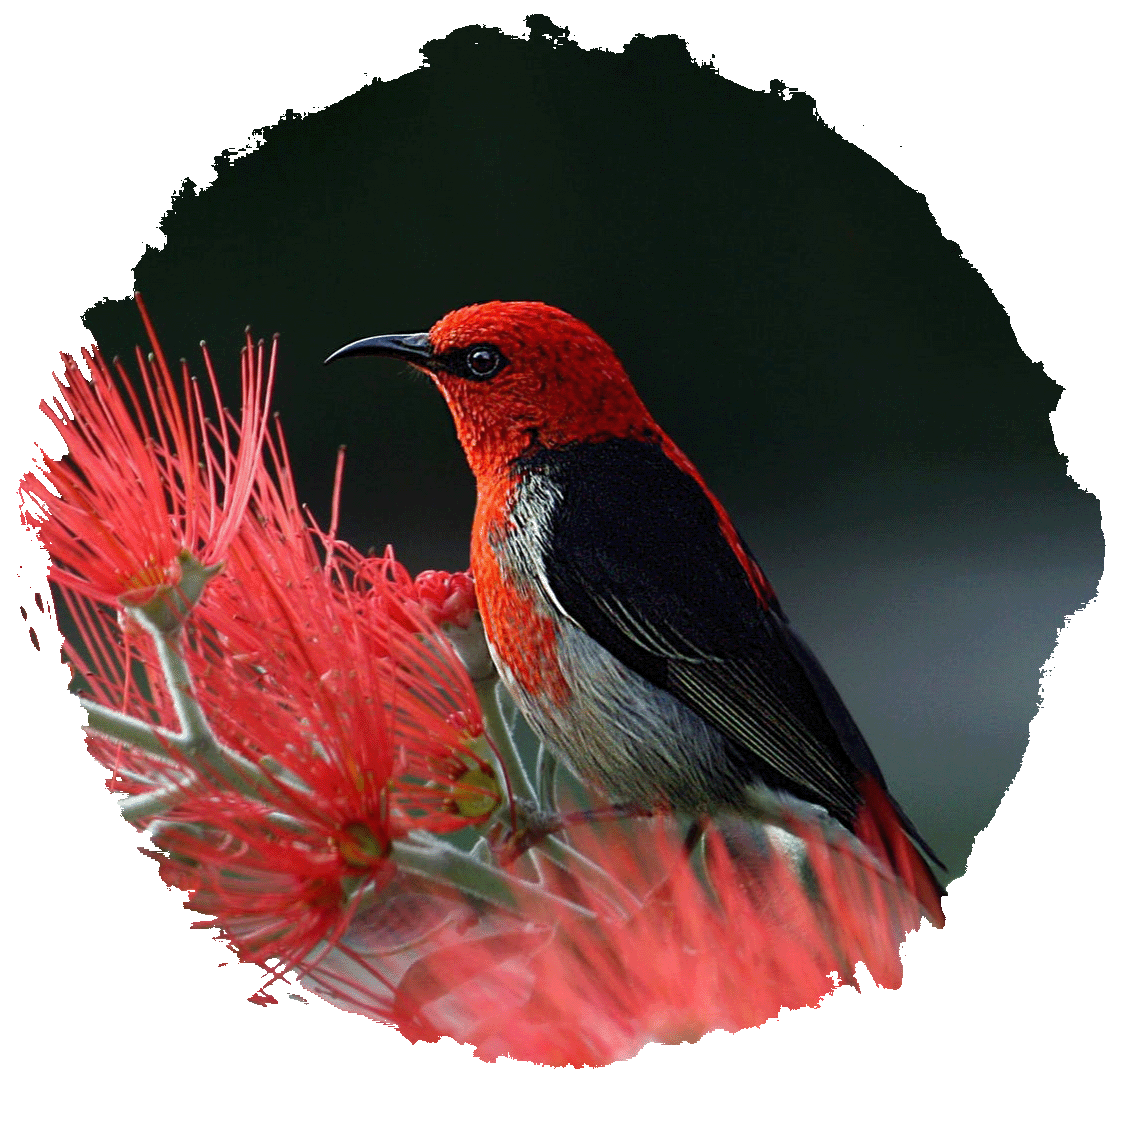 Vibrant red bird